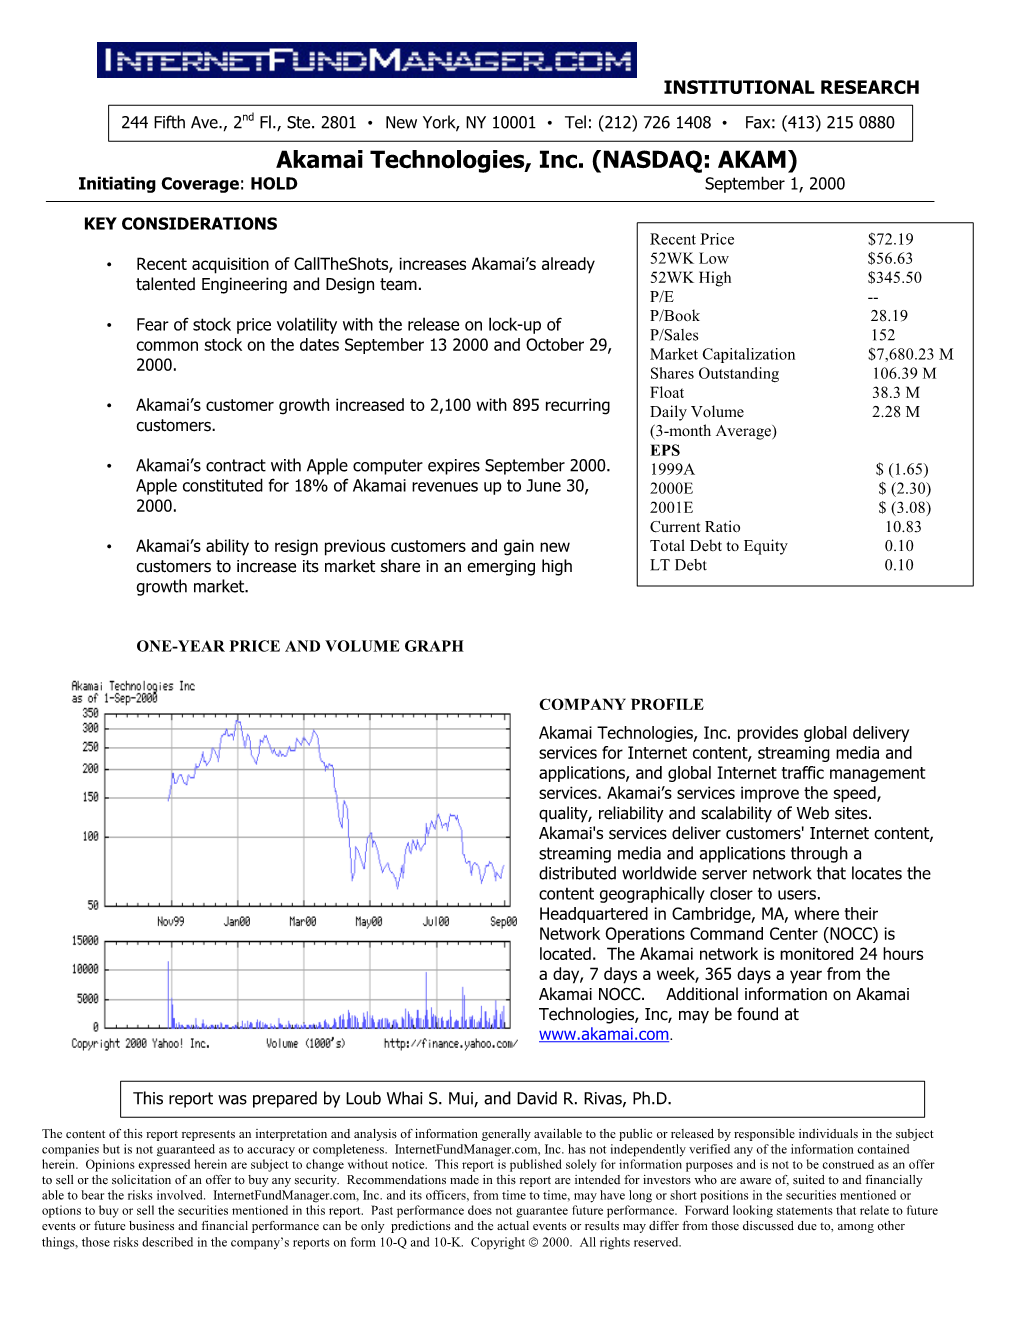 Akamai Technologies, Inc. (NASDAQ: AKAM) Initiating Coverage: HOLD September 1, 2000